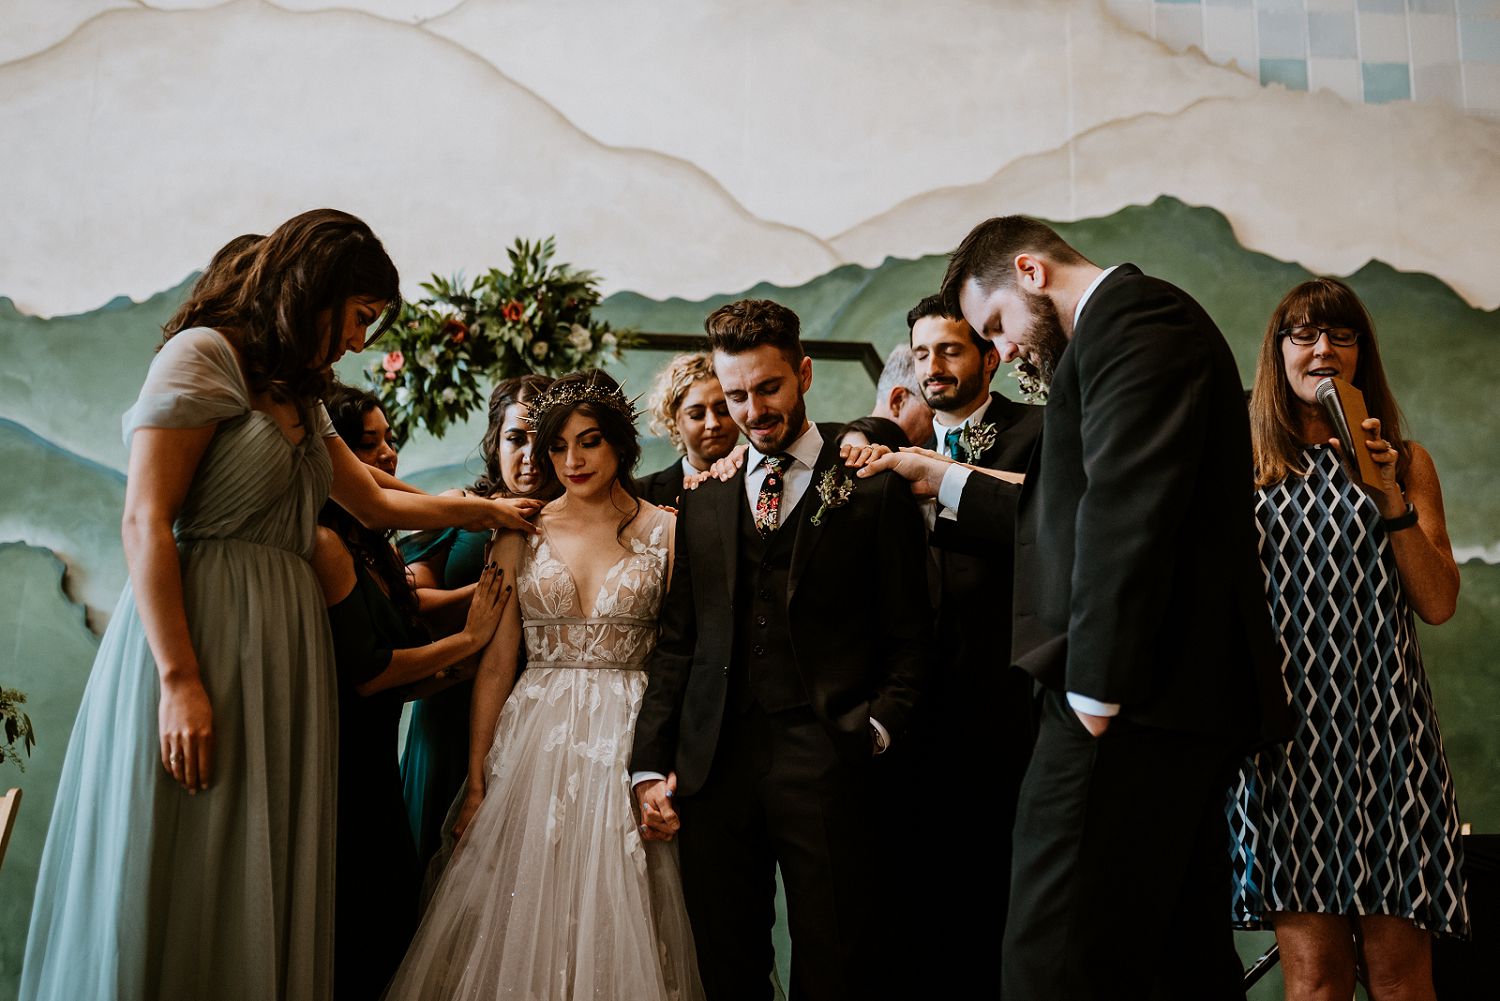 wedding prayer at reception